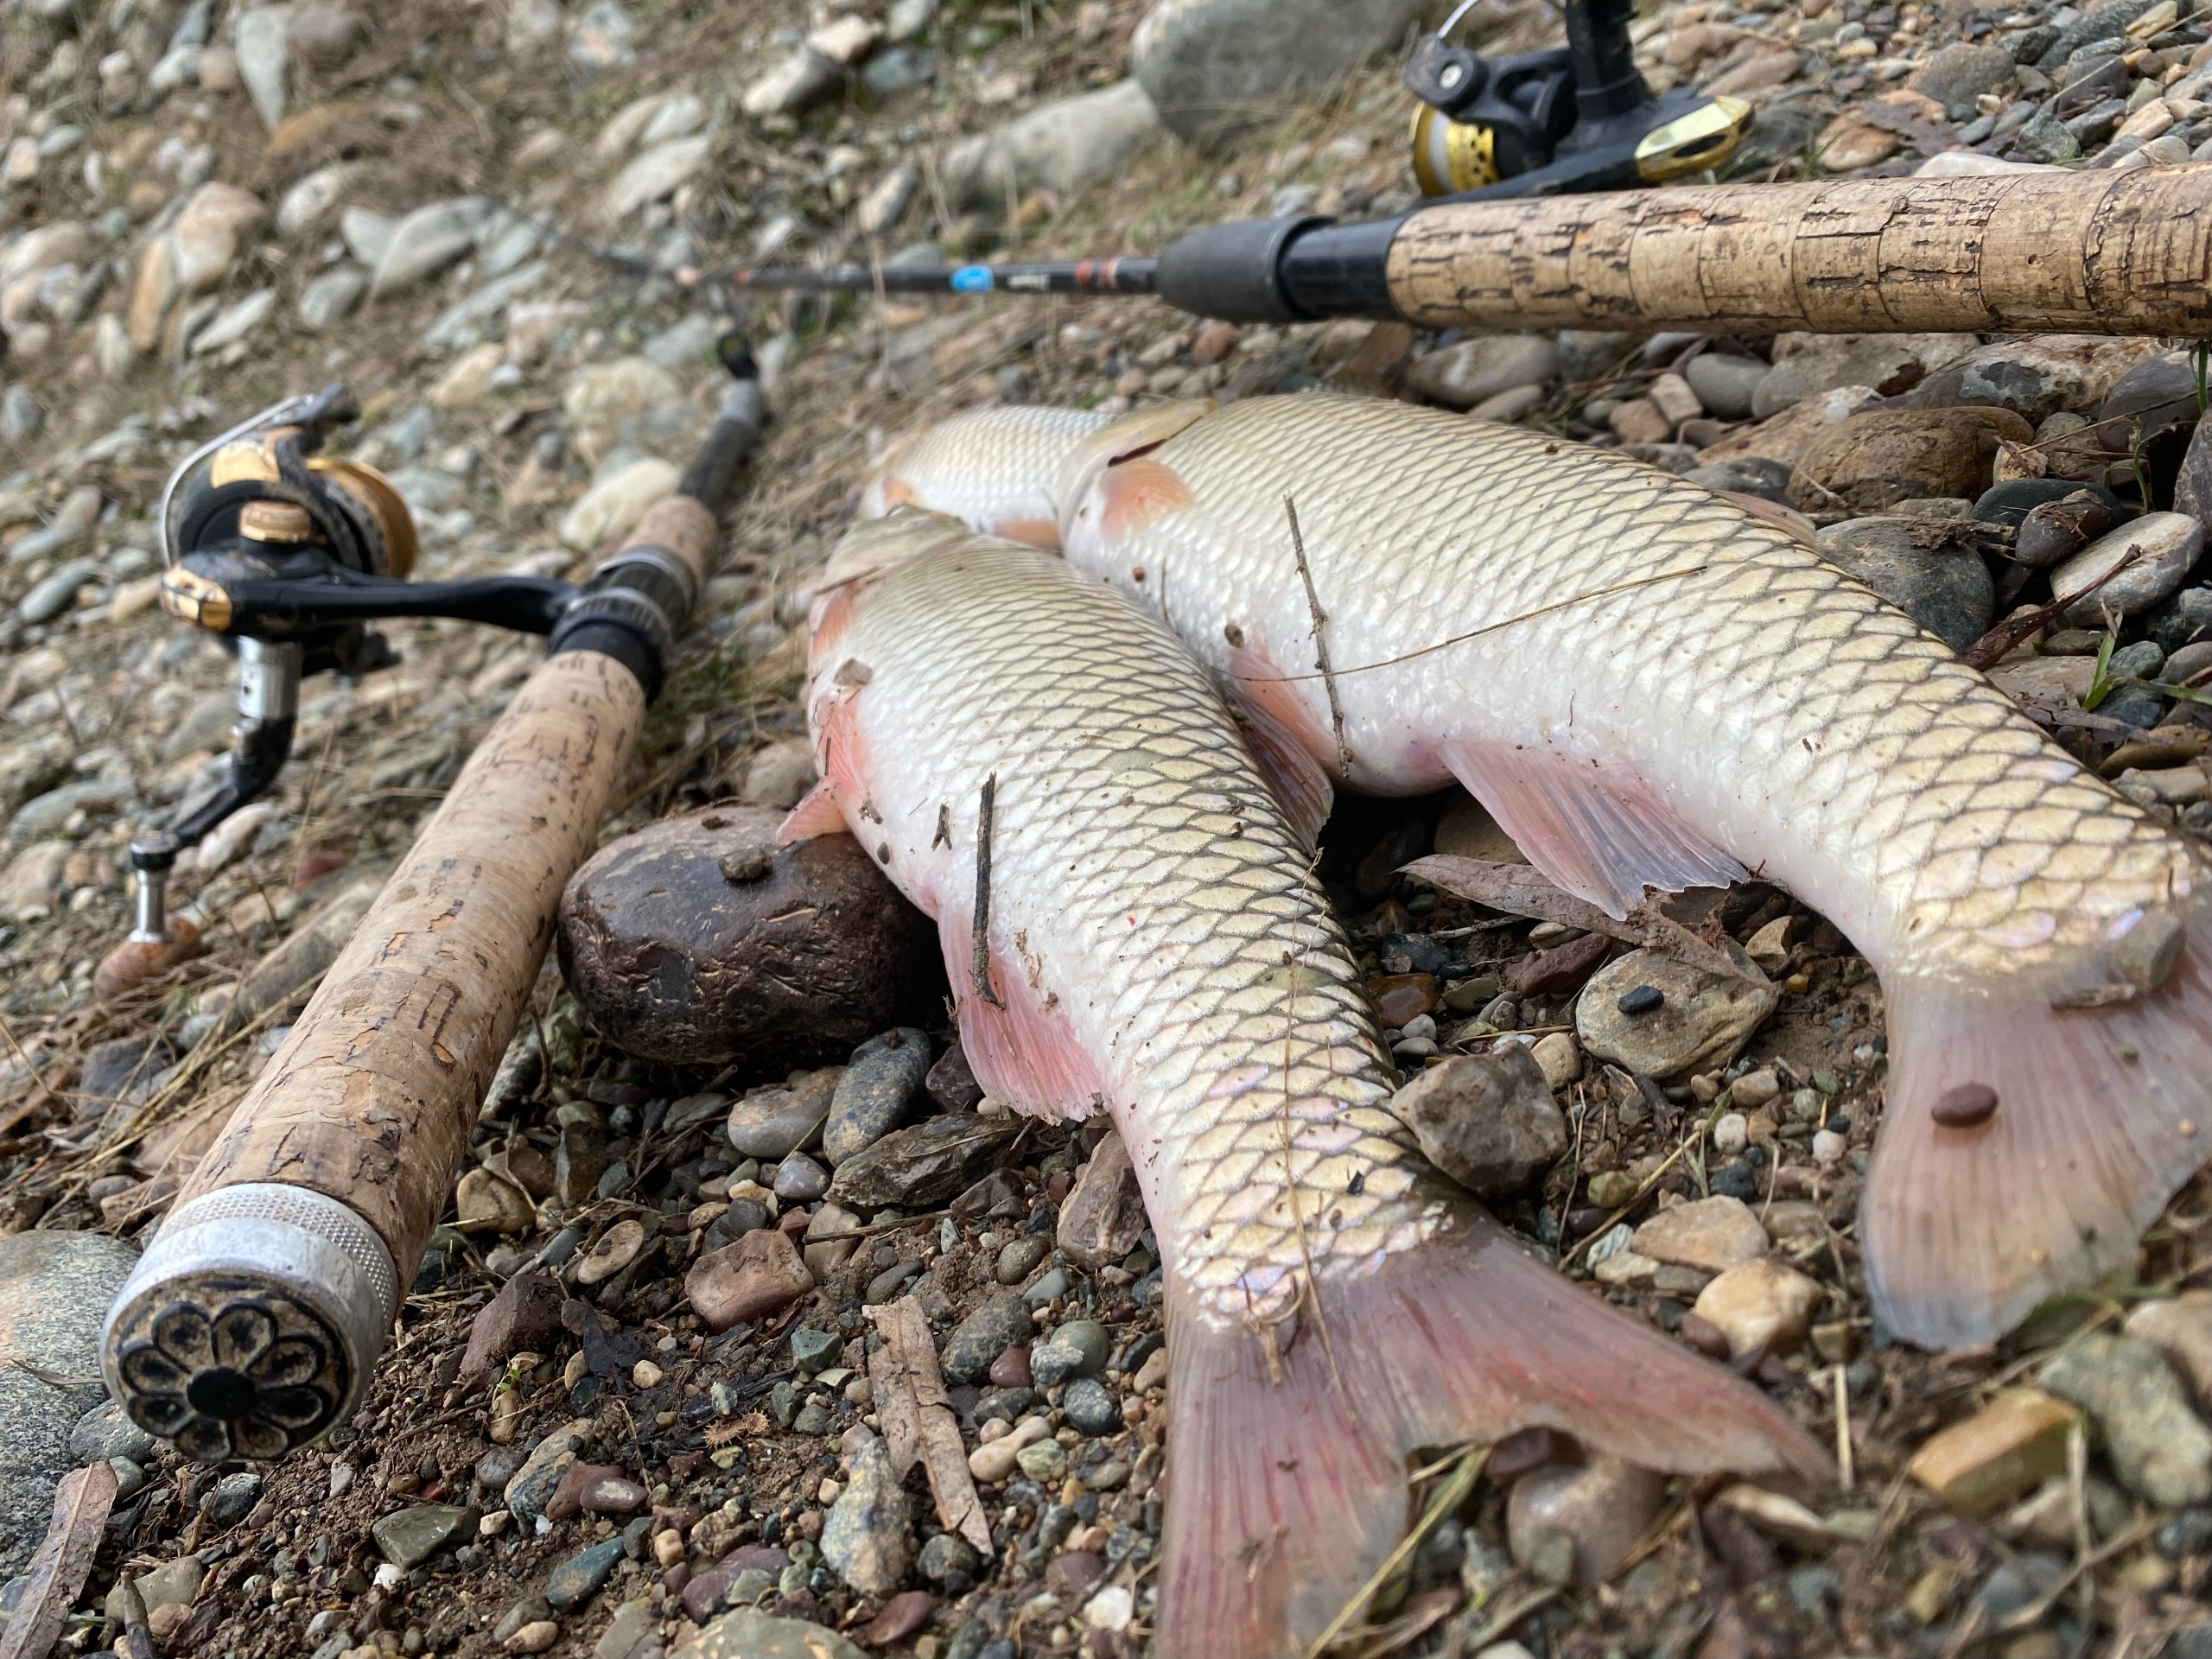 Freshwater: Bass still biting despite hot, humid weather